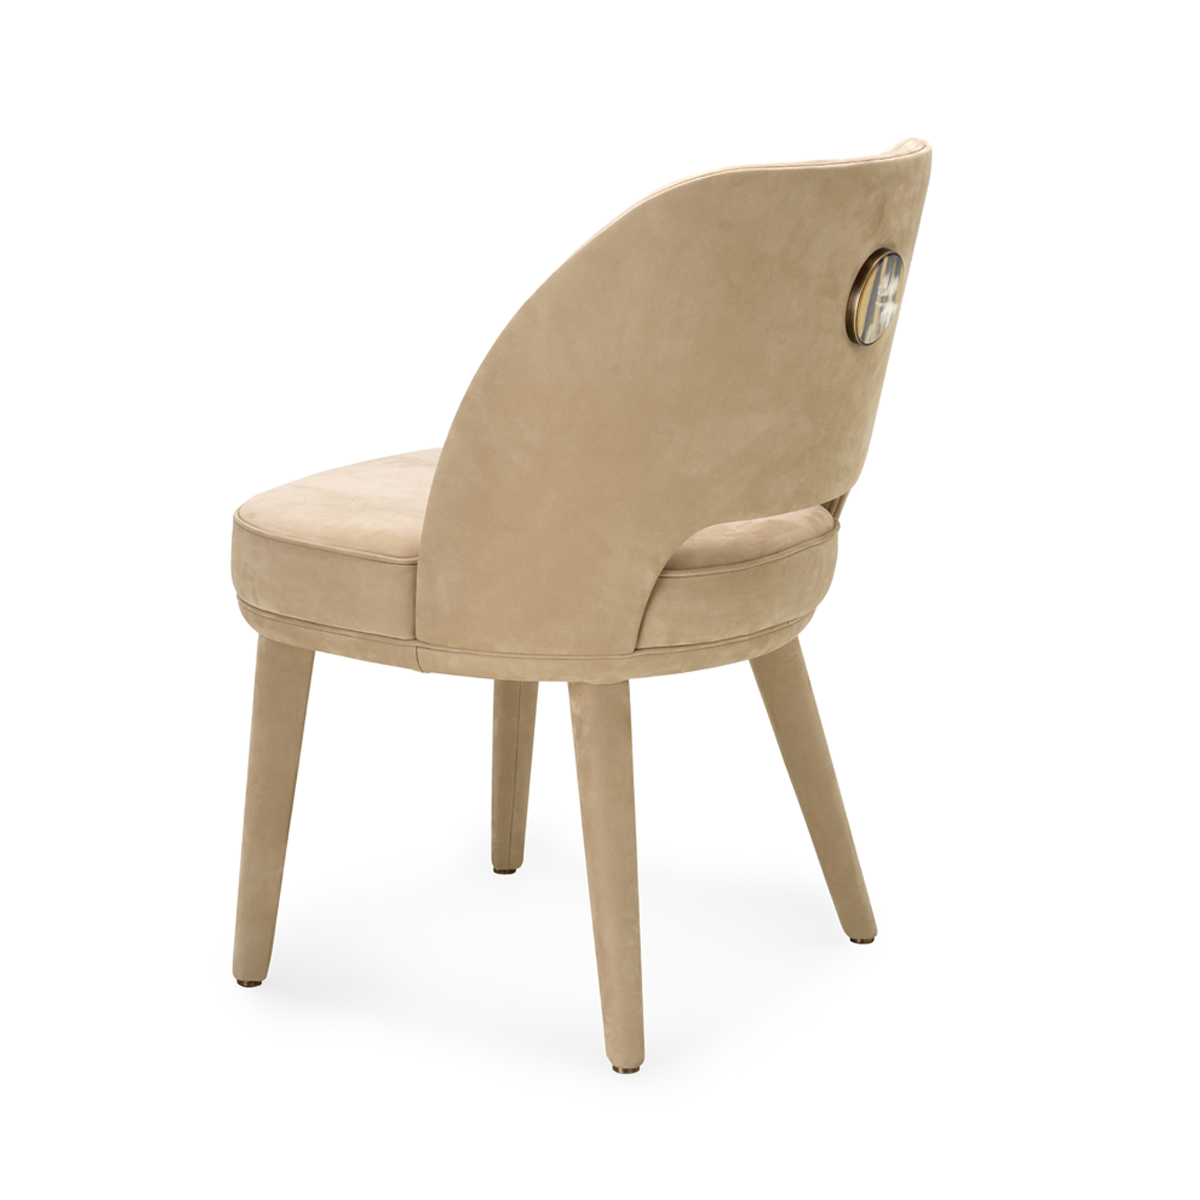 Arcahorn Penelope Chair